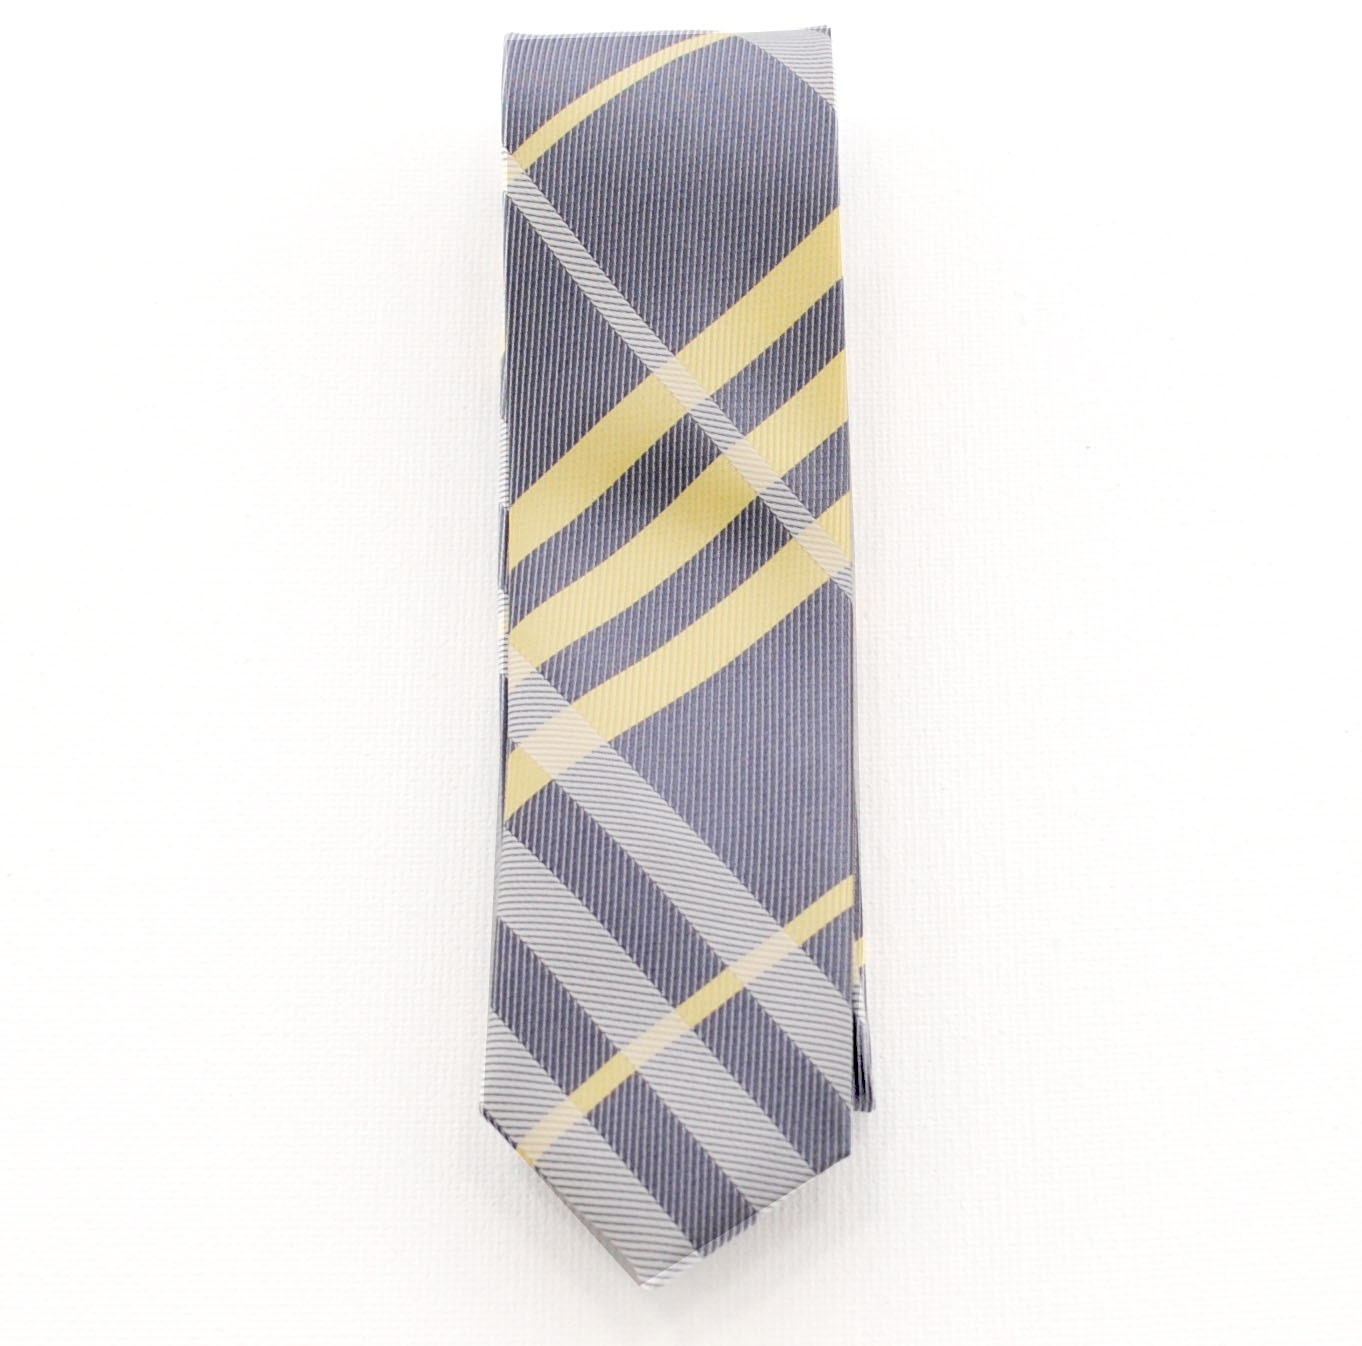 yellow plaid tie